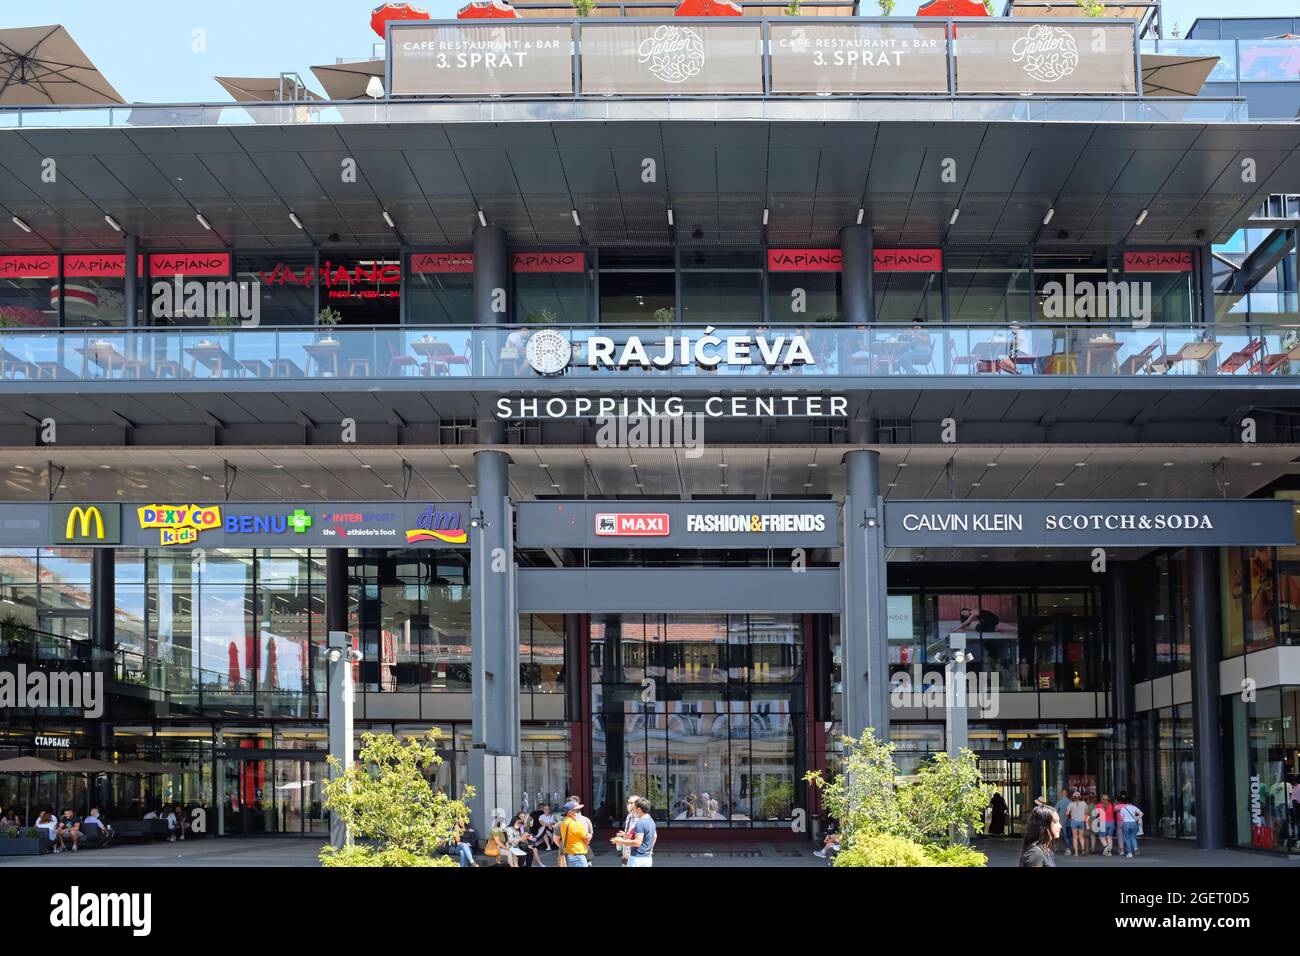 Belgrade, Serbia - July 5, 2021: Rajiceva shopping center at Knez Mihailova street in Belgrade, Serbia. Stock Photo